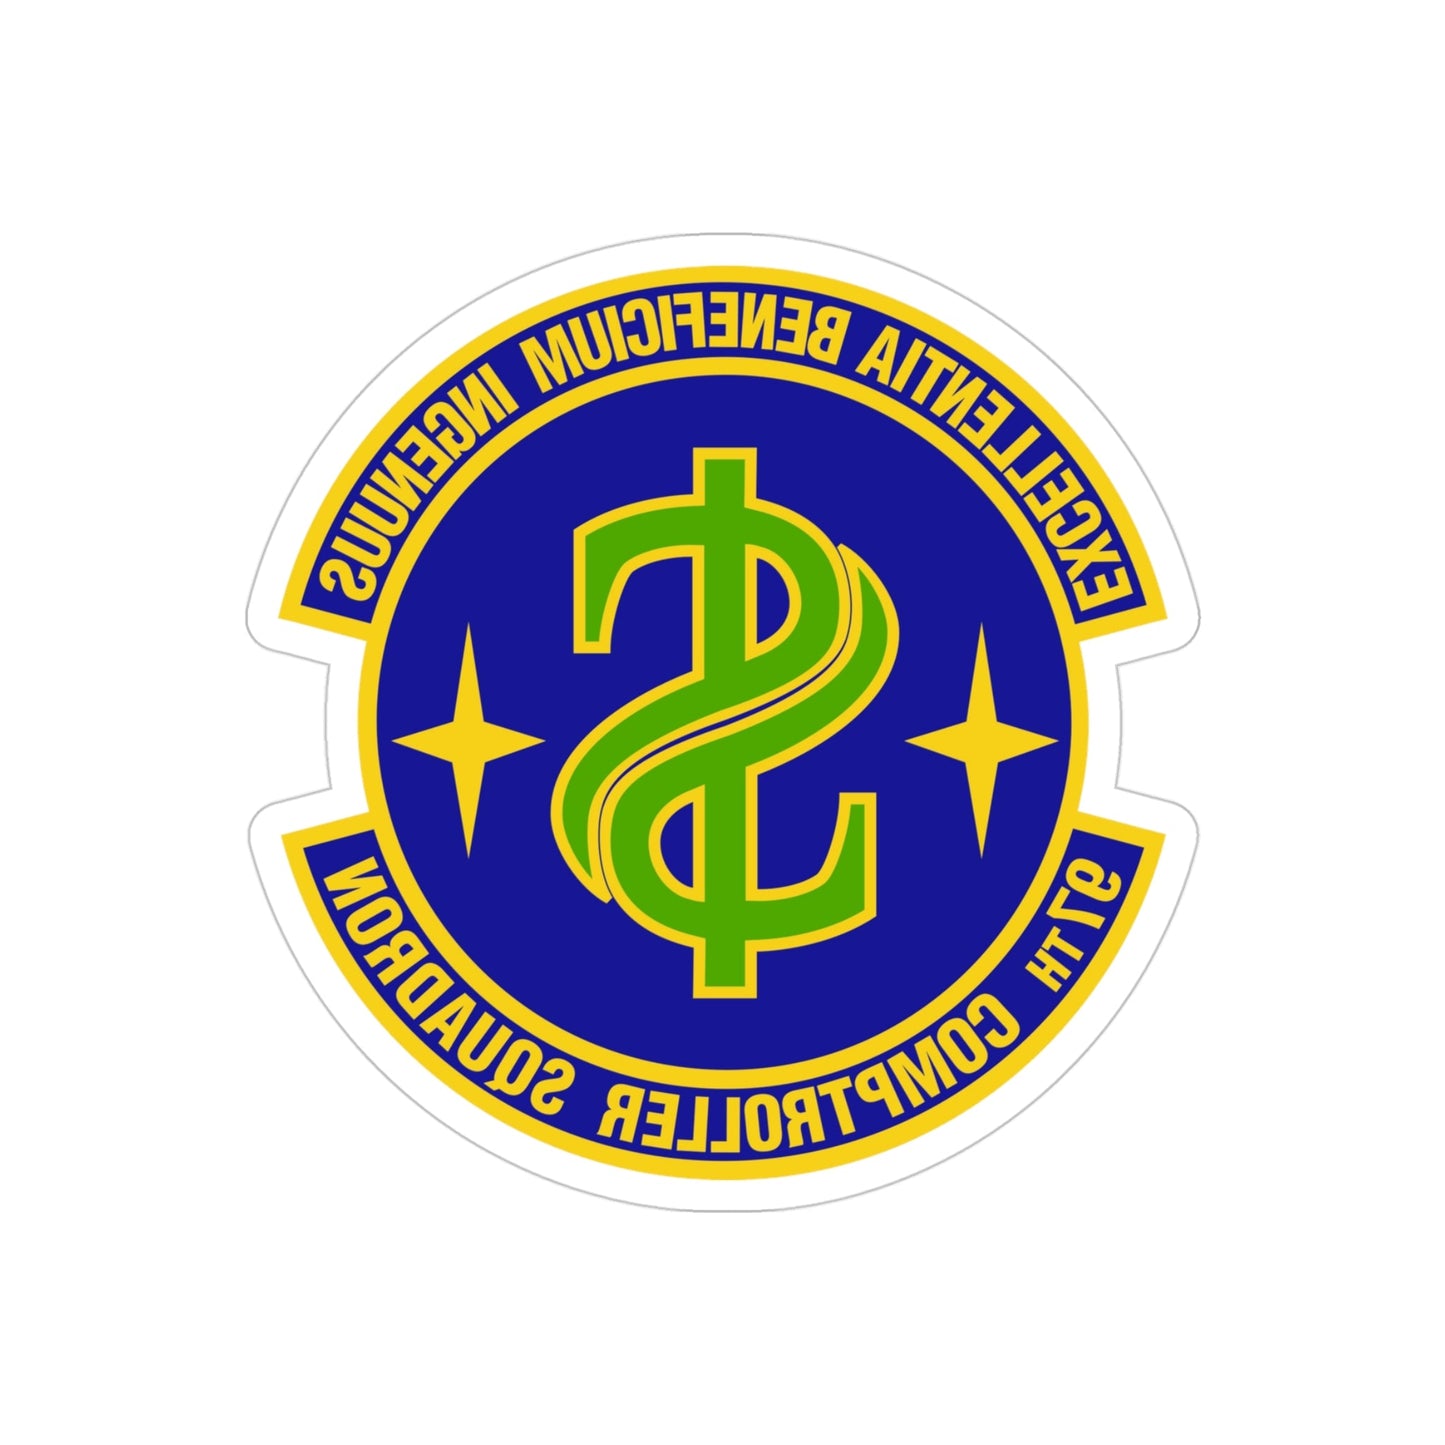 97th Comptroller Squadron (U.S. Air Force) REVERSE PRINT Transparent STICKER